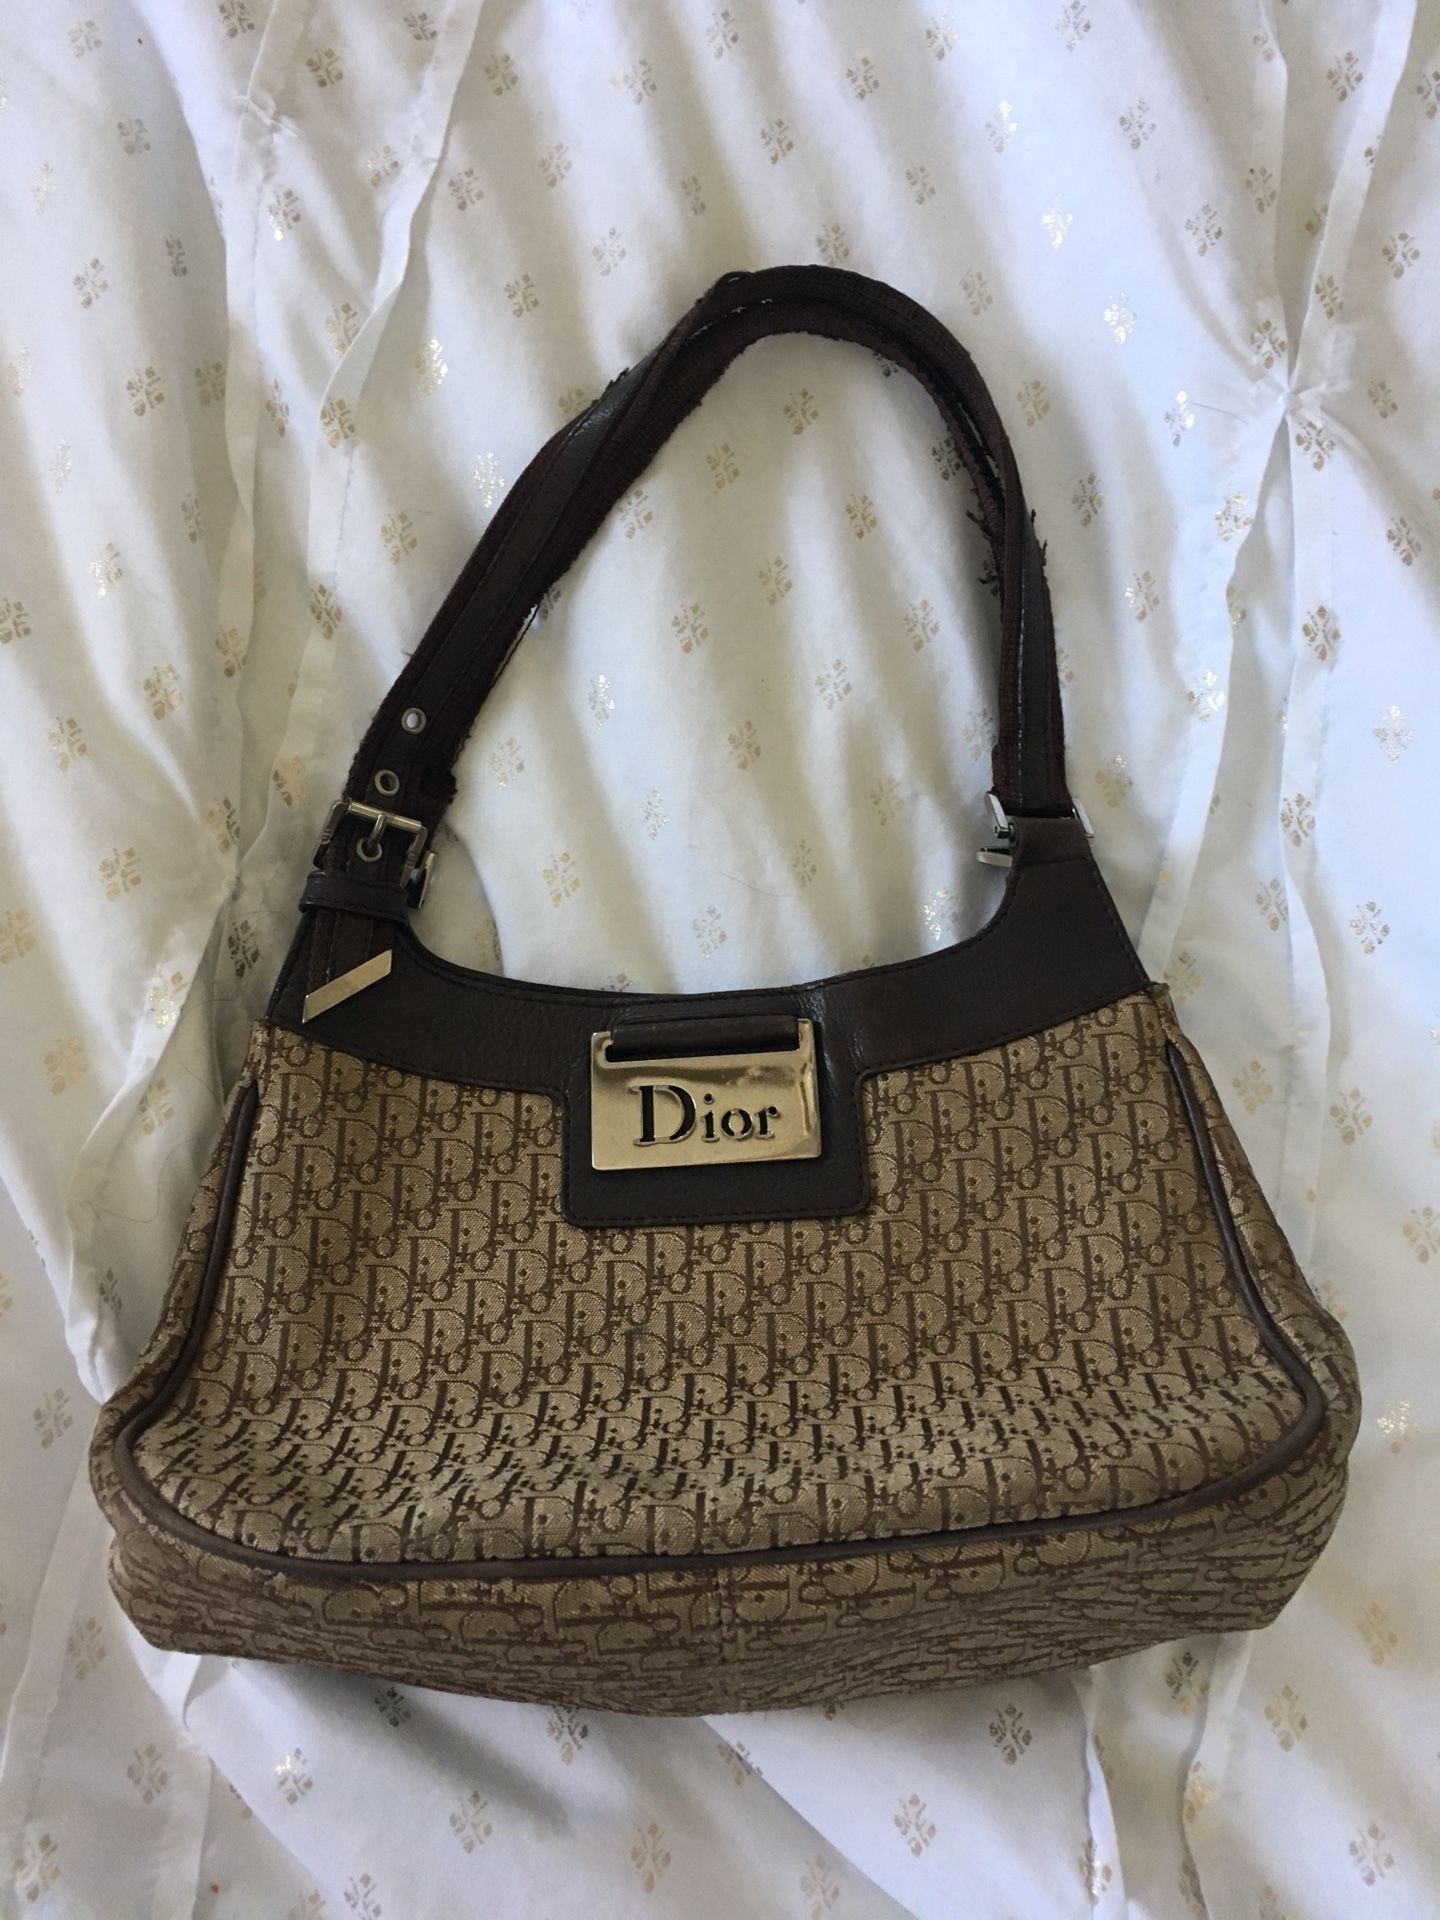 Vintage Dior Bag for Sale in Virginia Beach, VA - OfferUp